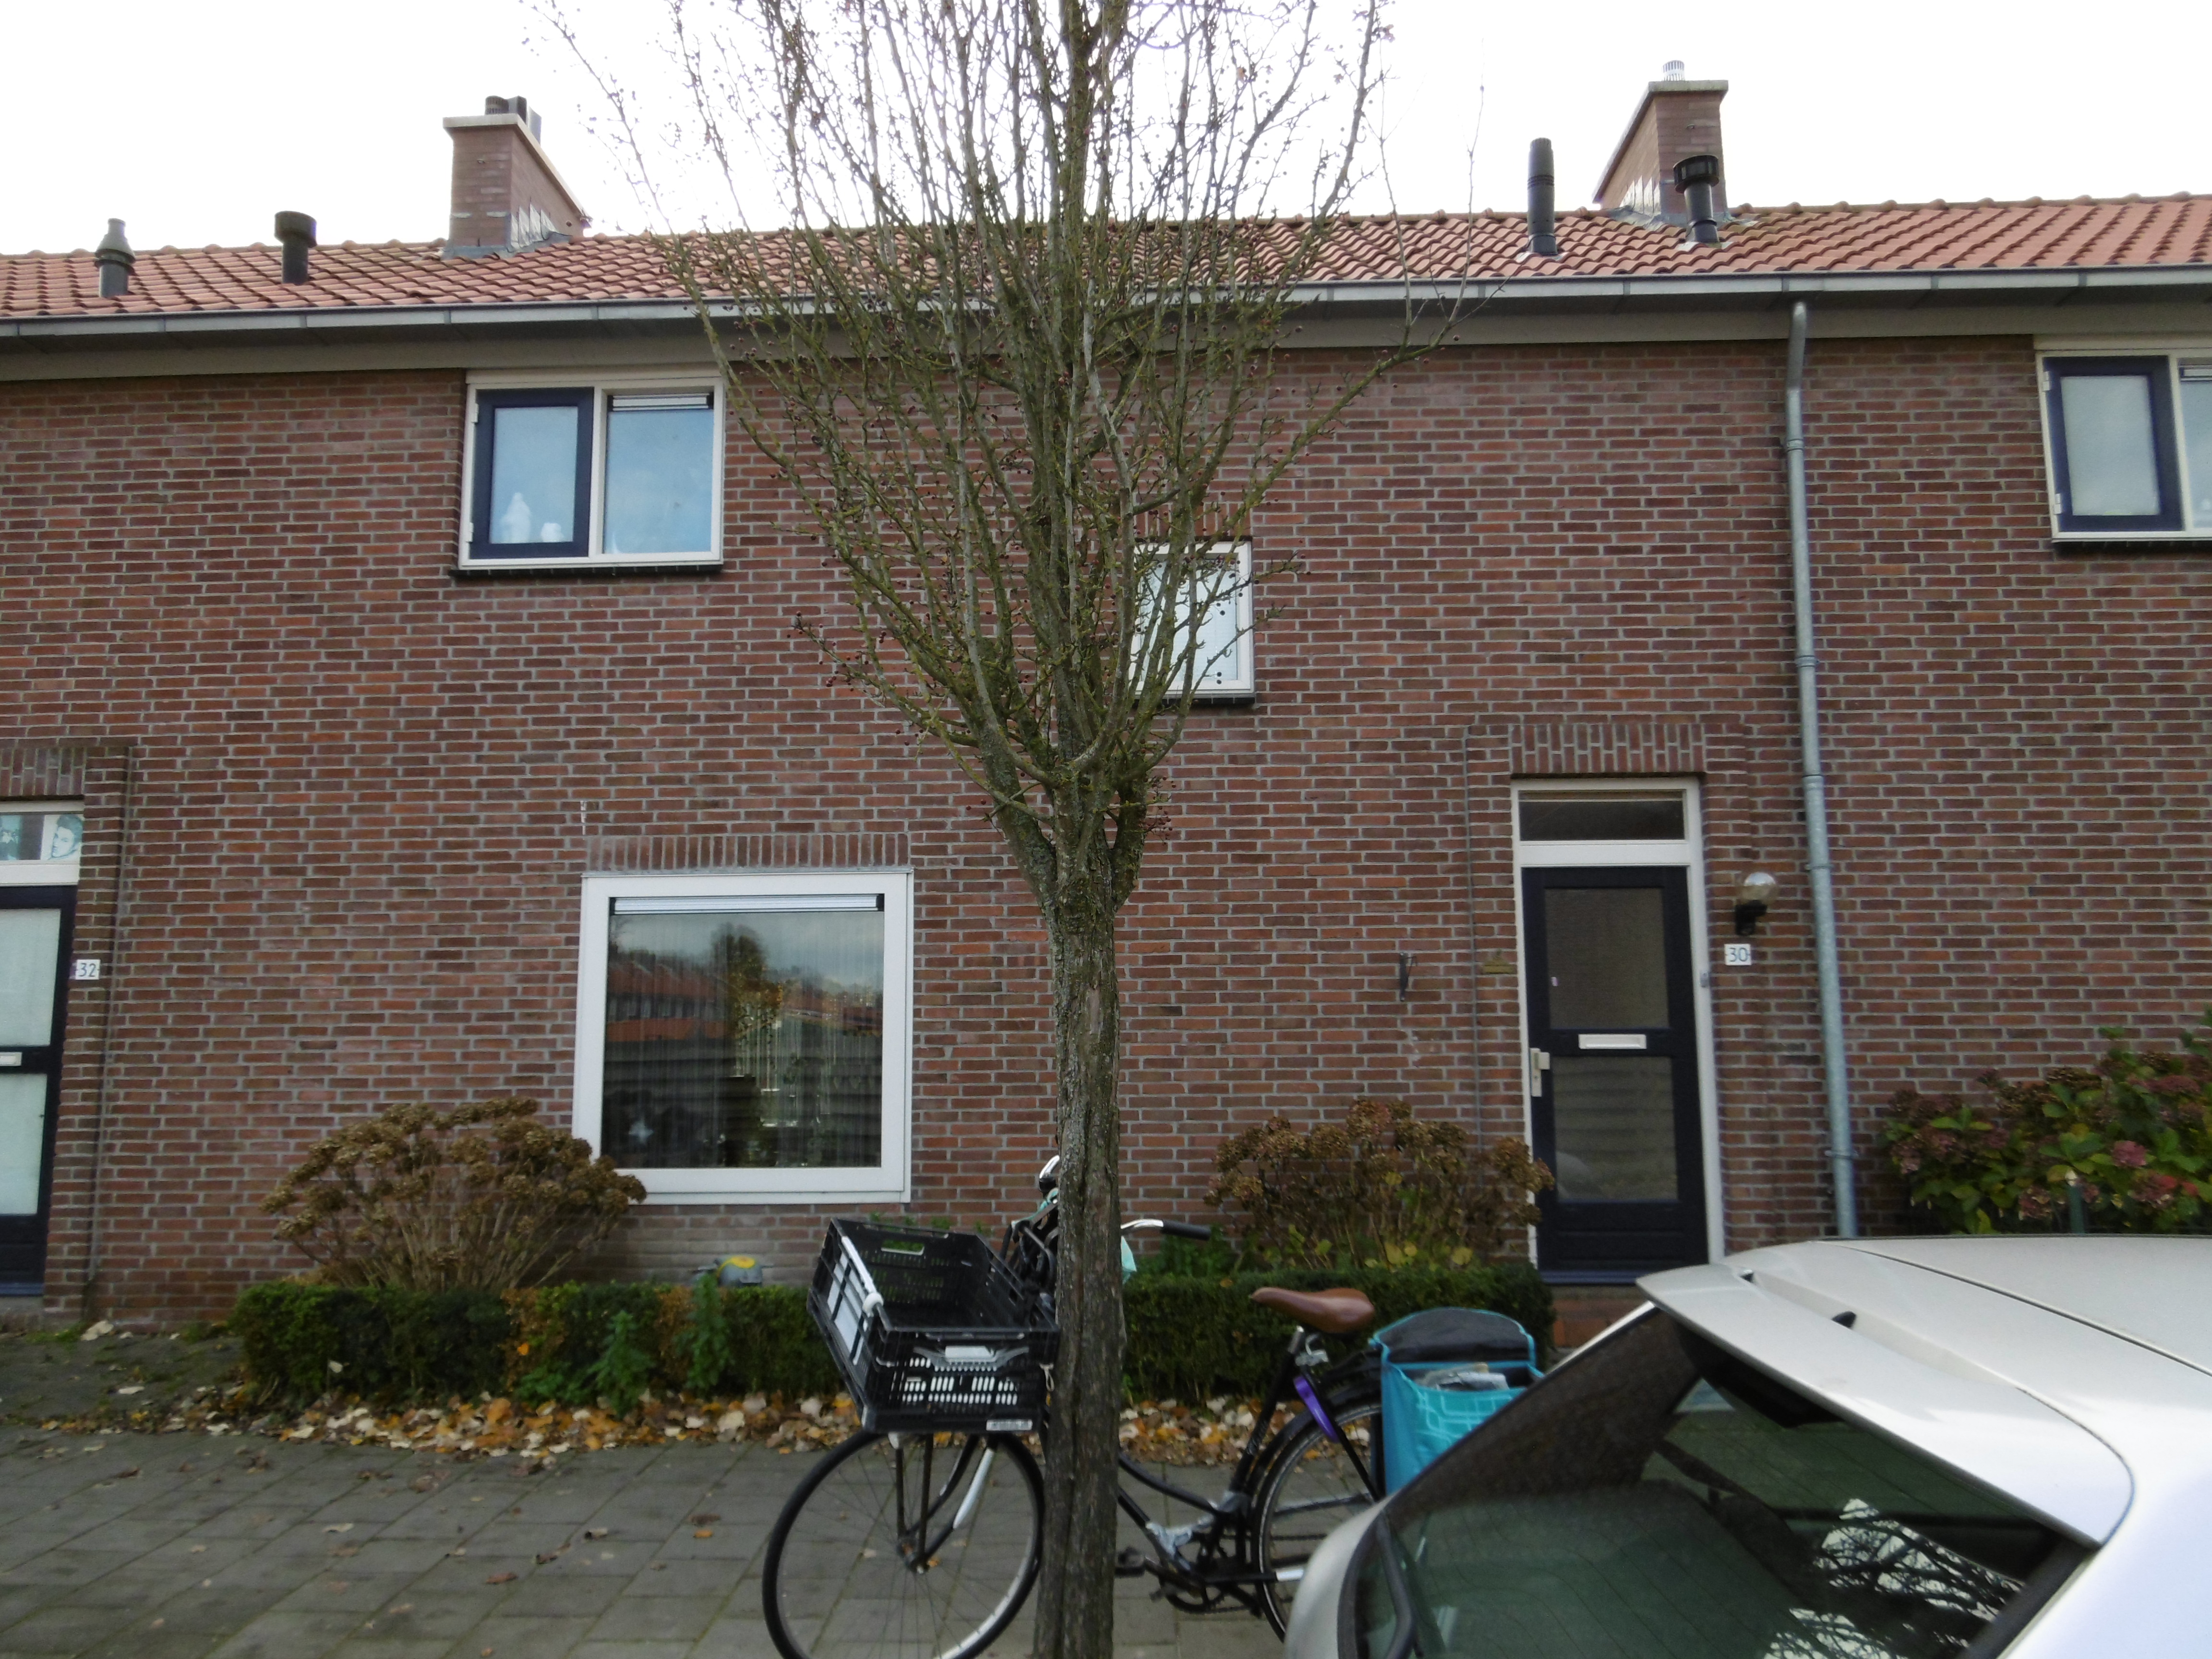 Leemansstraat 30, 8302 GT Emmeloord, Nederland